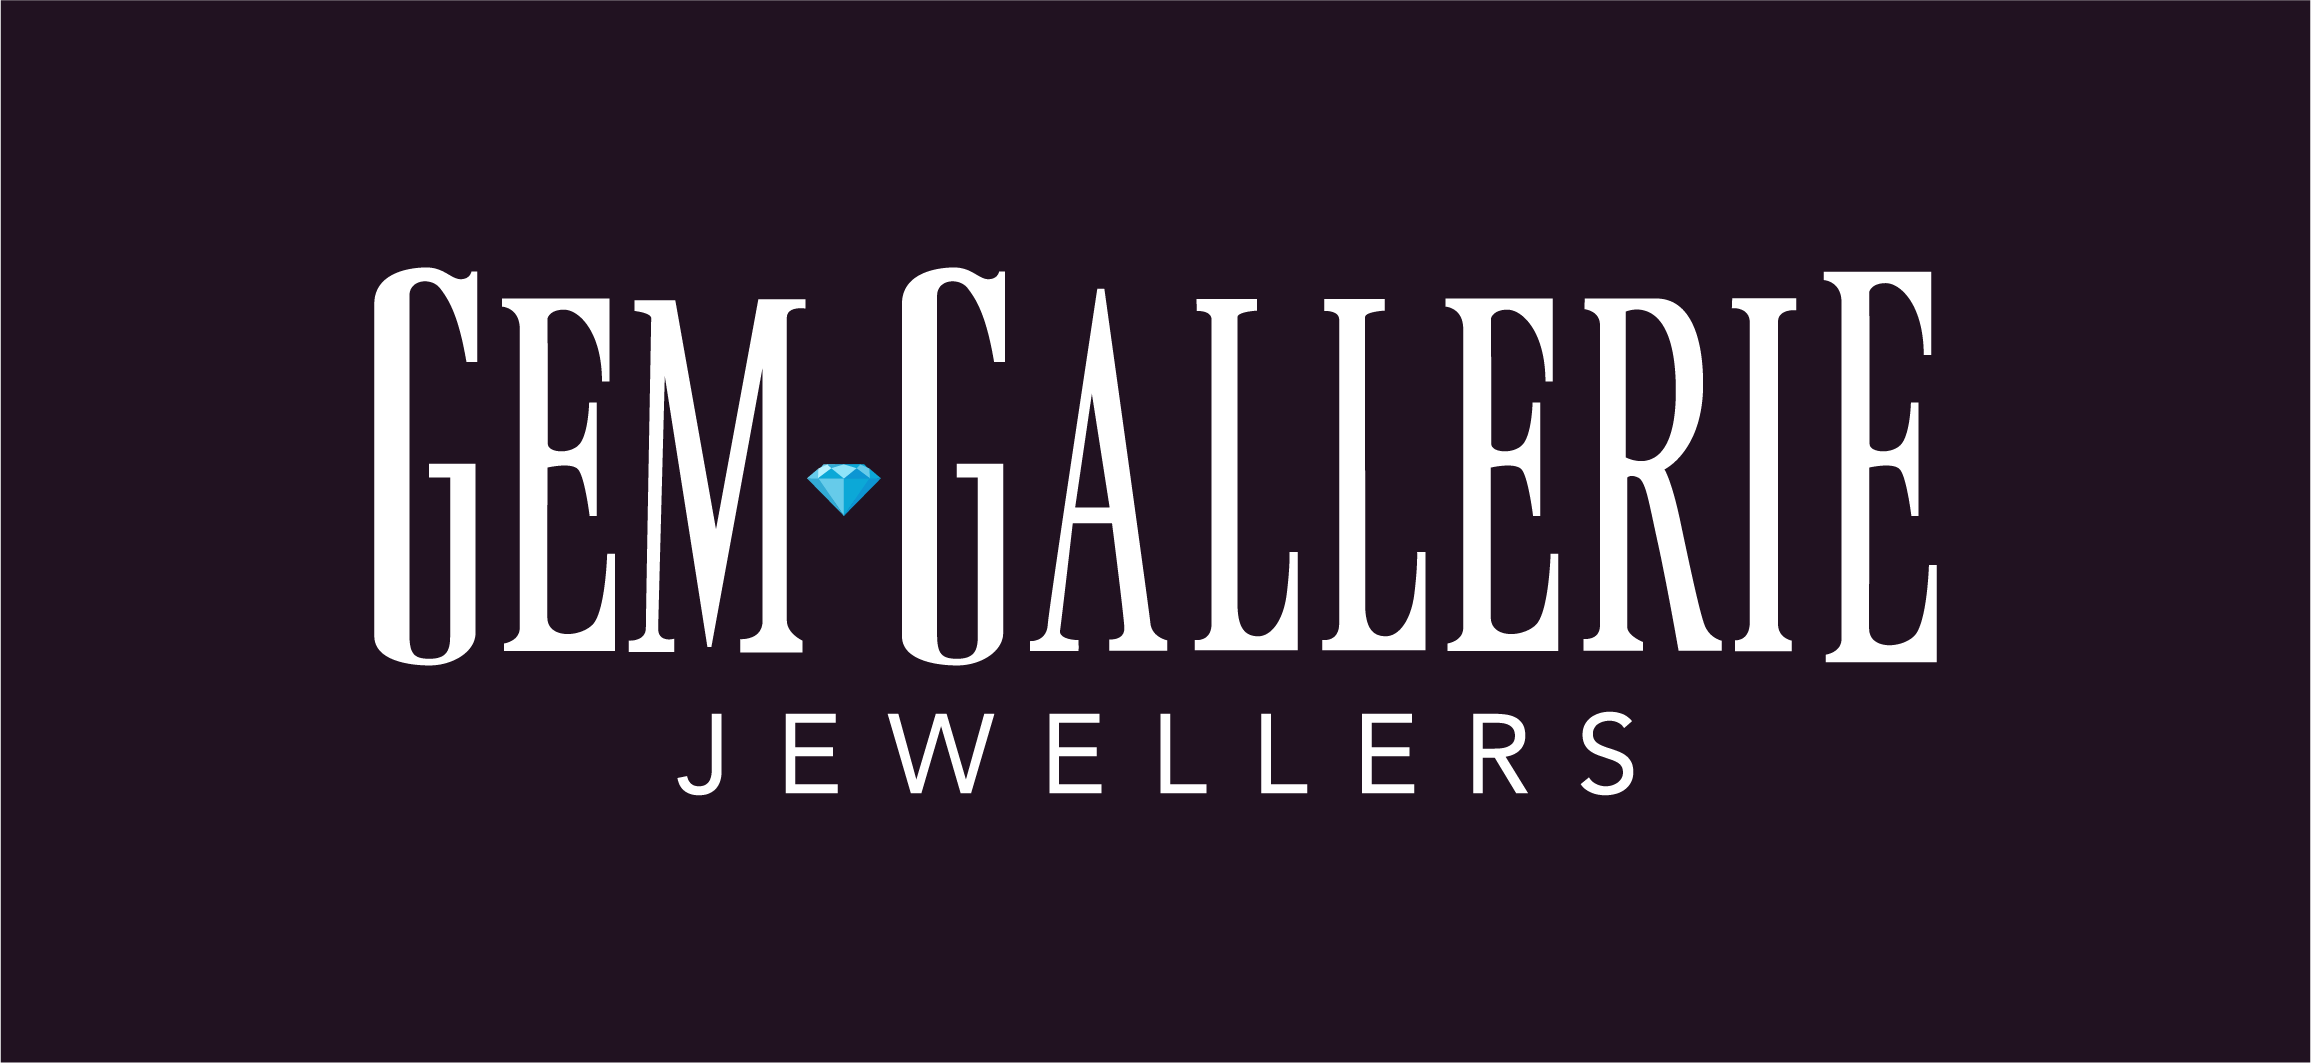 Gem Gallerie Jewellers Ltd.